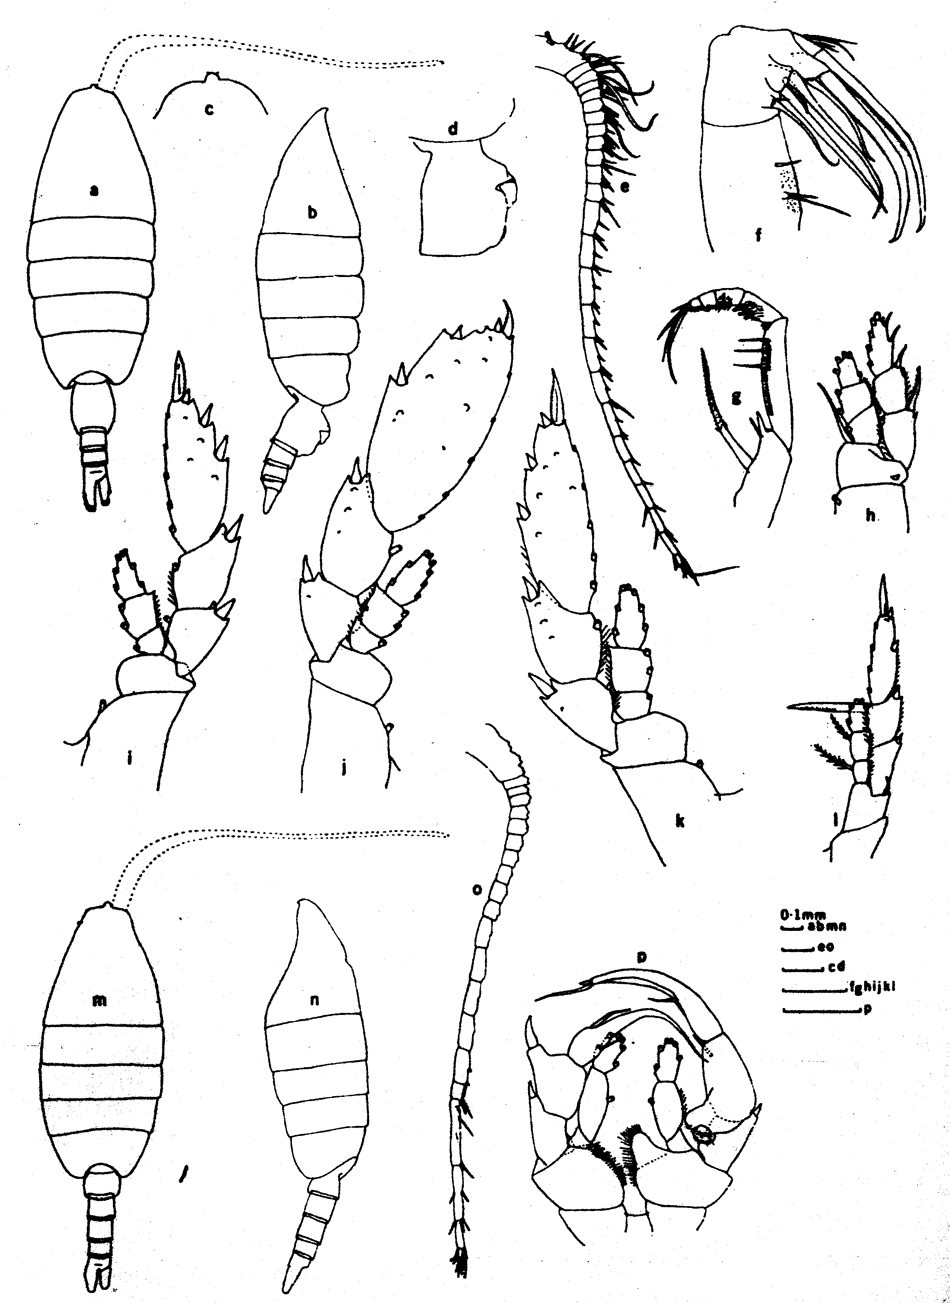 Species Heterorhabdus caribbeanensis - Plate 4 of morphological figures